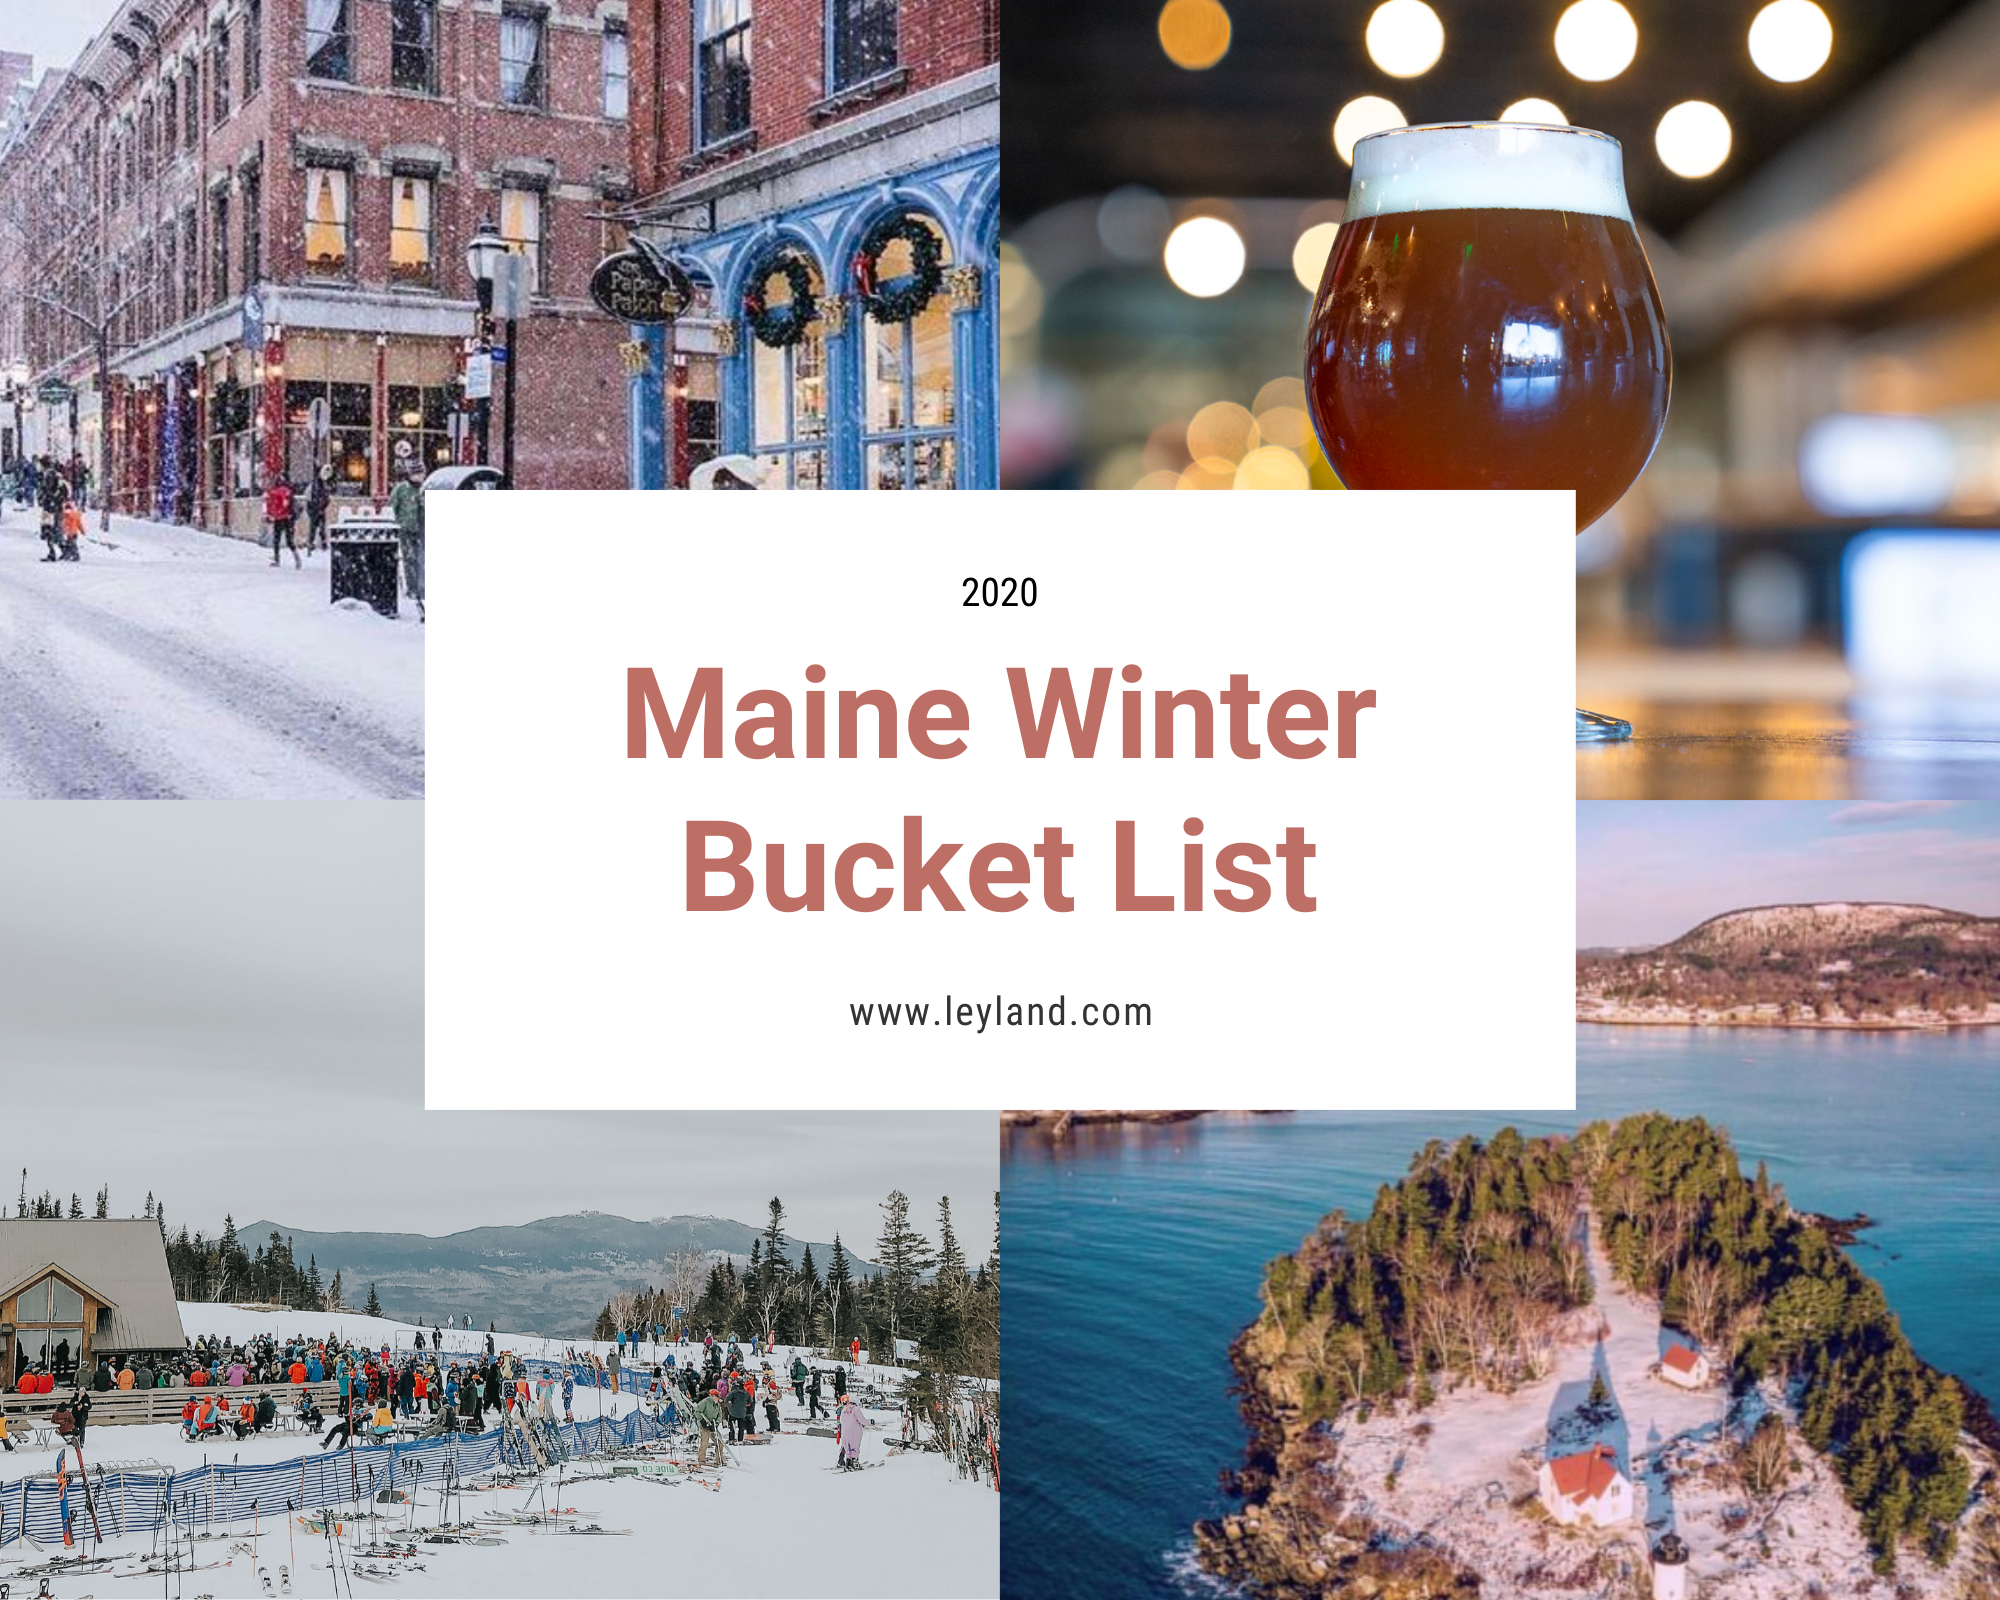 Our Maine Winter Bucket List